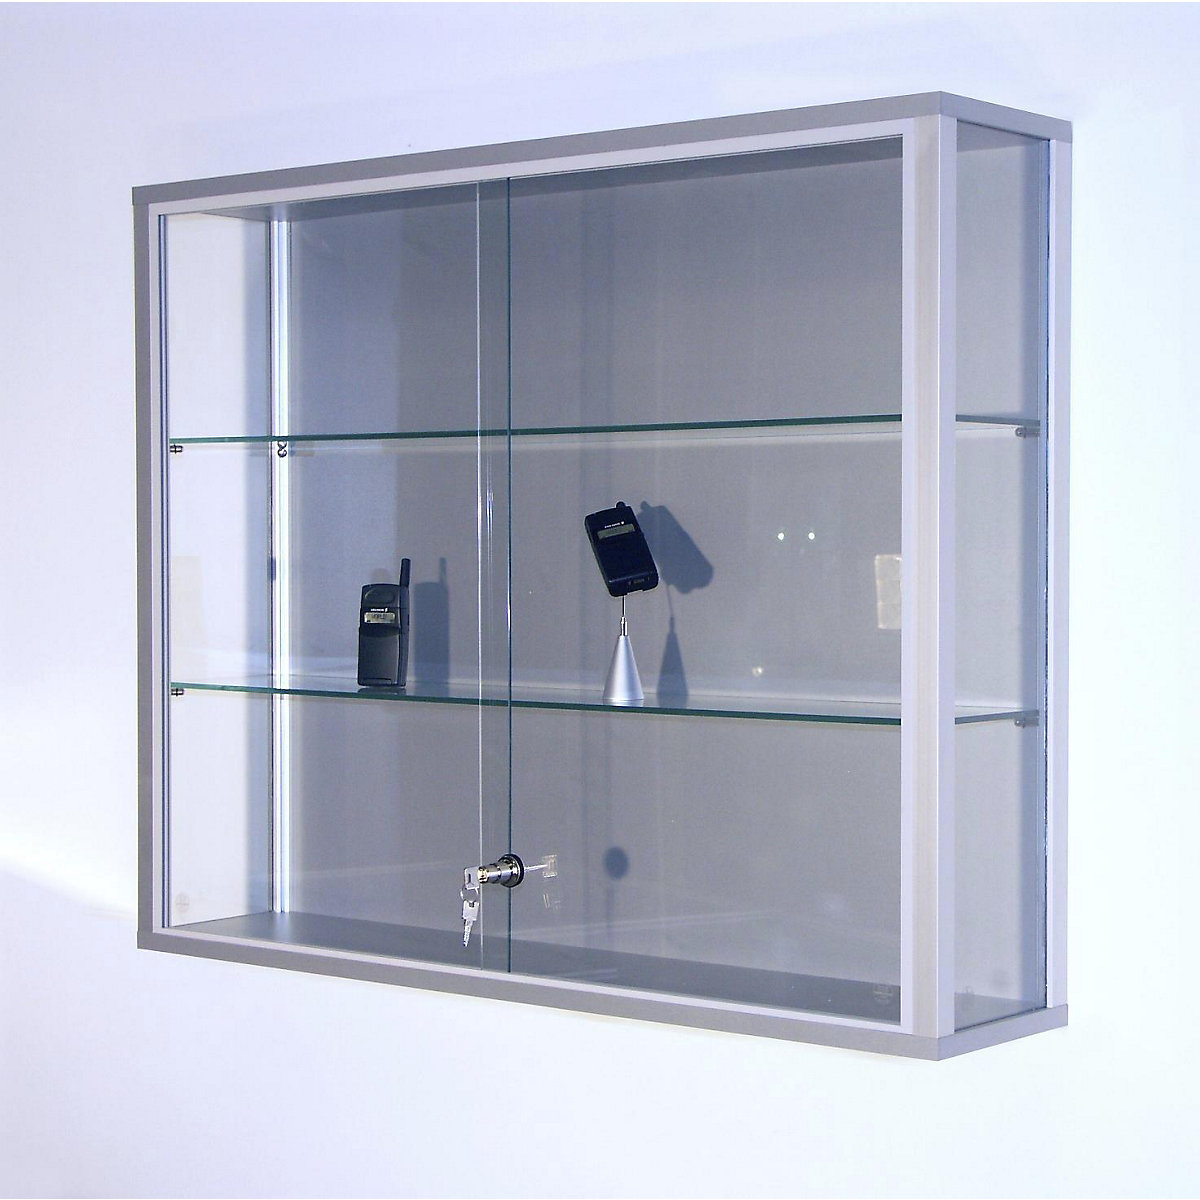 Nástěnná vitrína LINK, 2 police, posuvné dveře, v x š x h 800 x 1000 x 200 mm